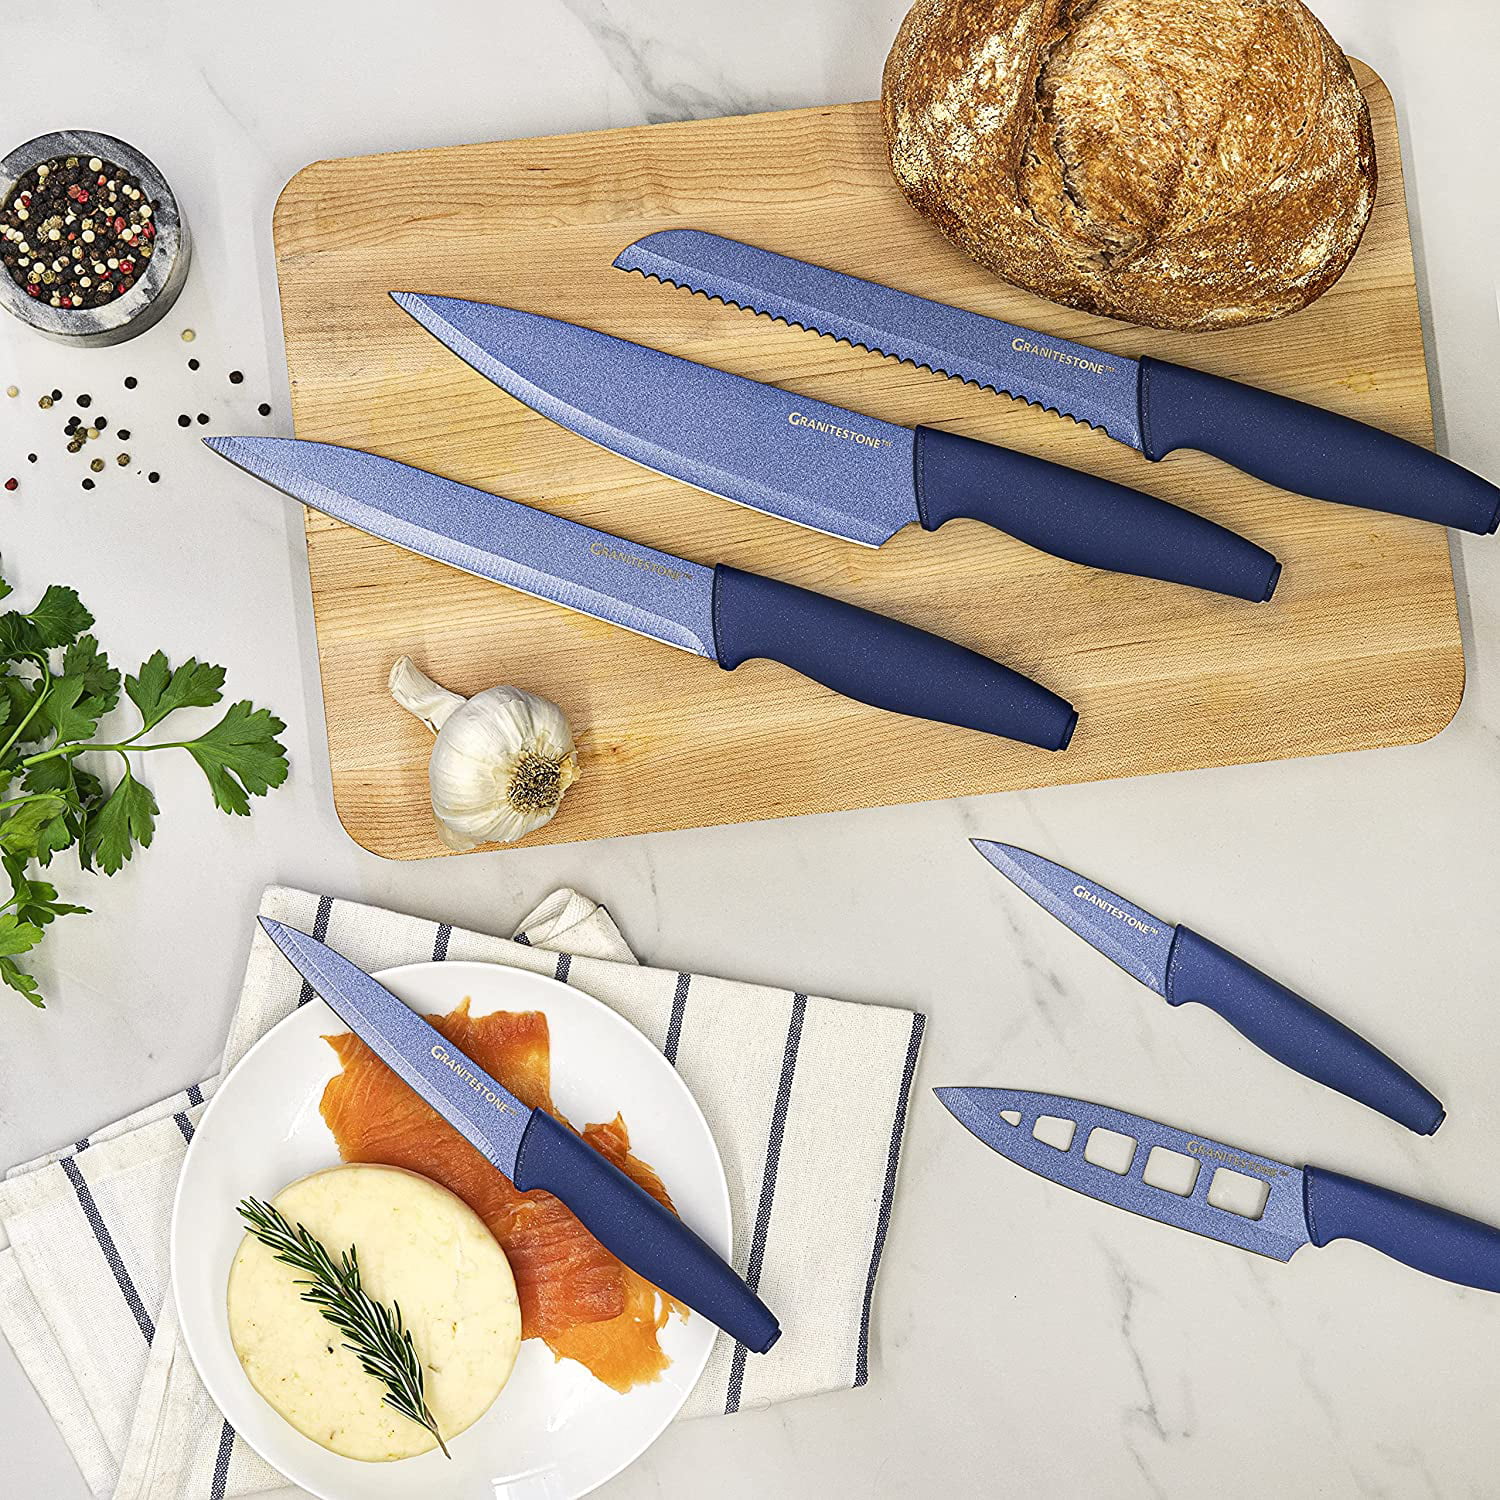  Granitestone Nutriblade Knife Set, High Grade Professional Chef  Kitchen Knives Set, Knife Sets Toughened Stainless Steel w Nonstick Mineral  Coating, Blue, 6 Piece: Home & Kitchen